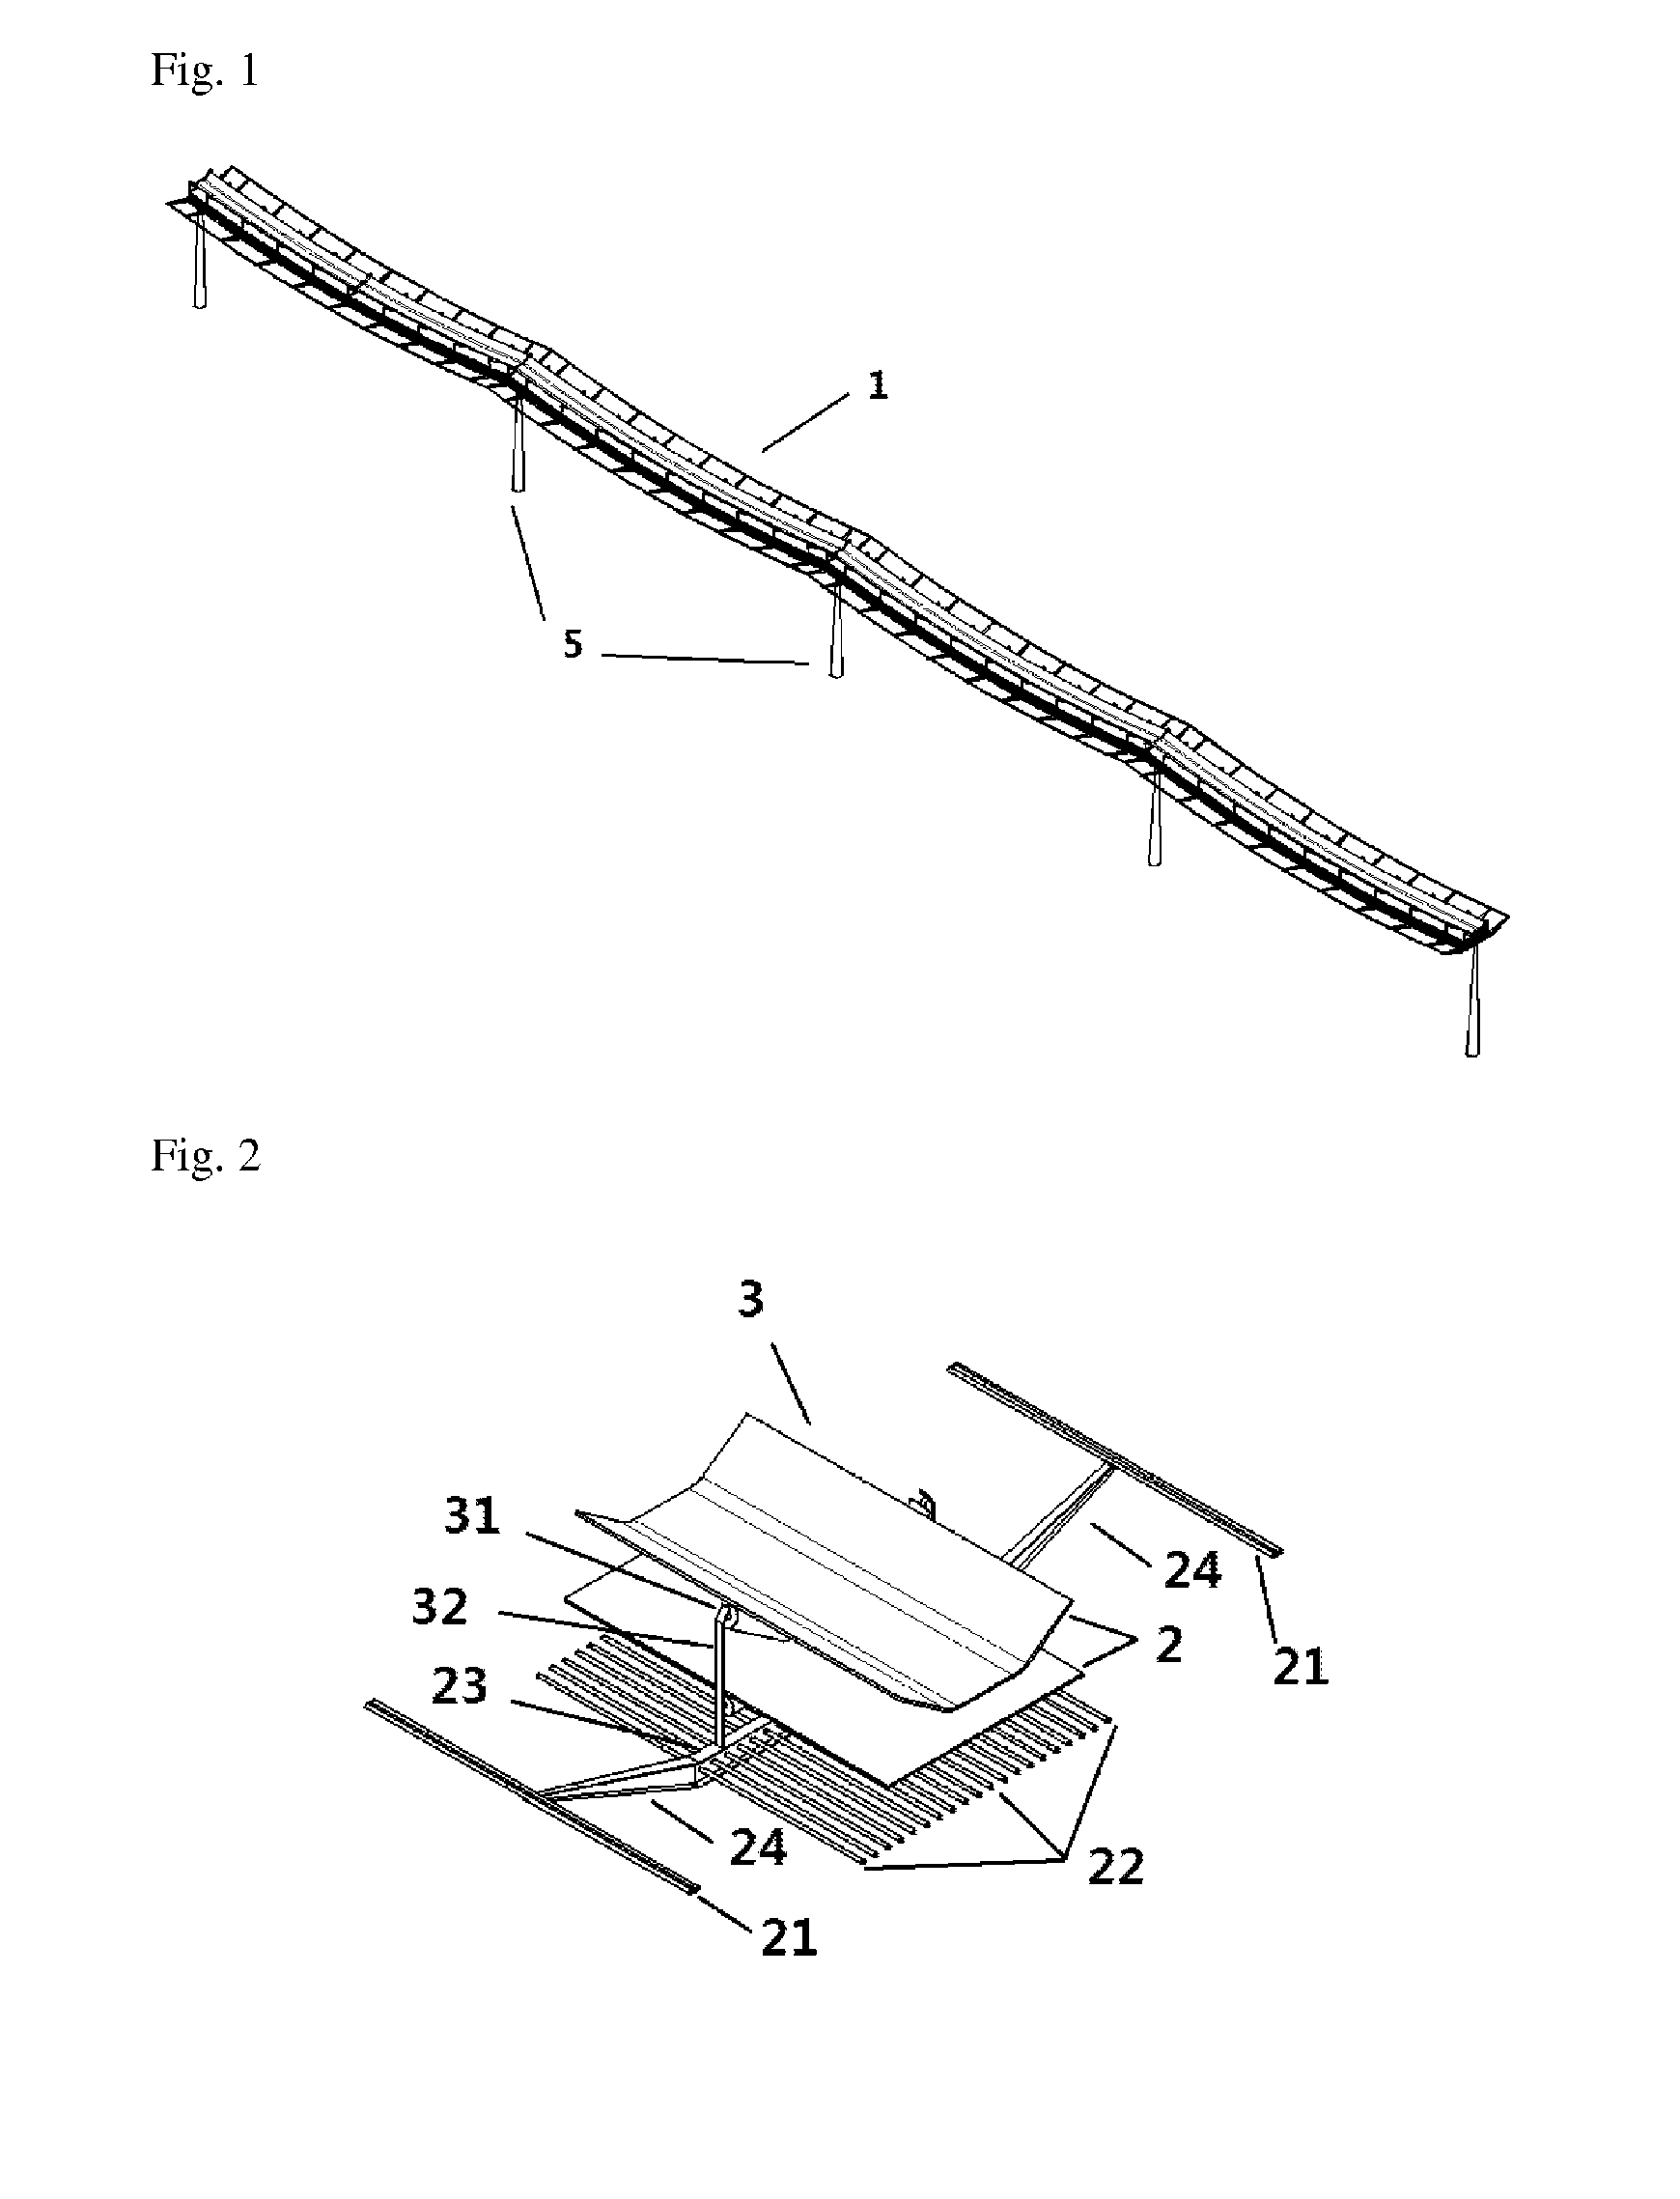 Simple suspension bridge type belt conveyor